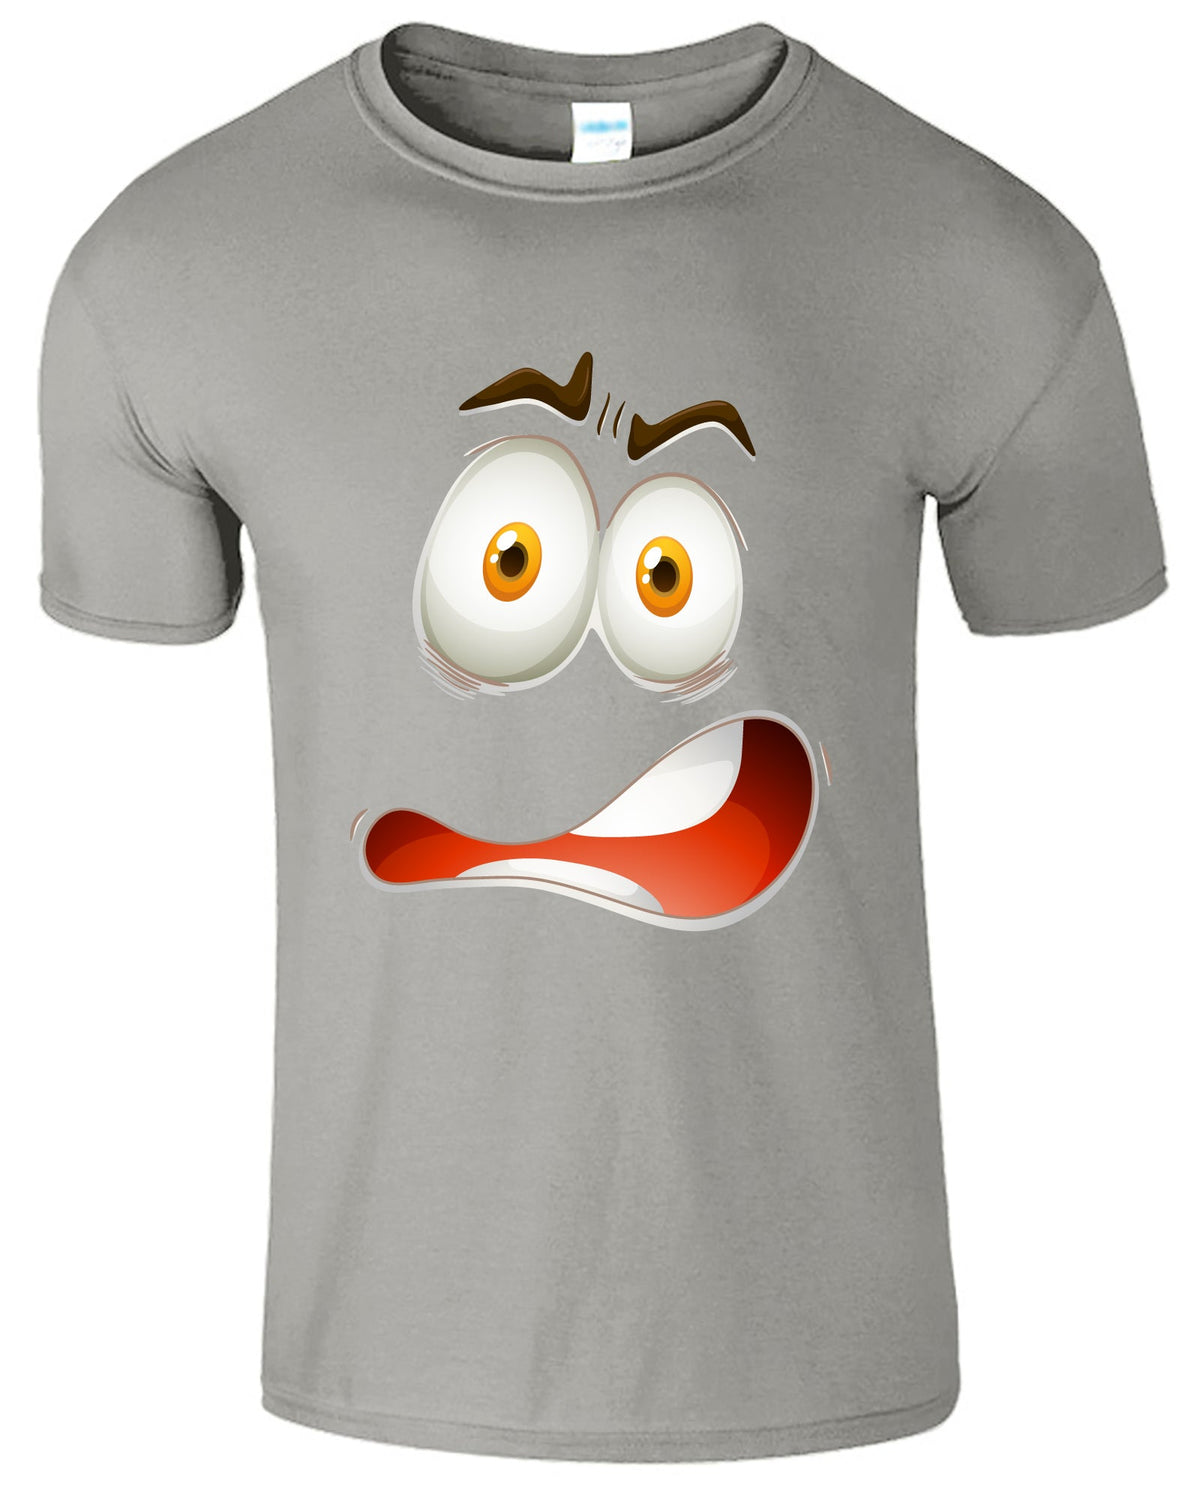 3D Print Big White Eyes Funny Face Men's T-Shirt